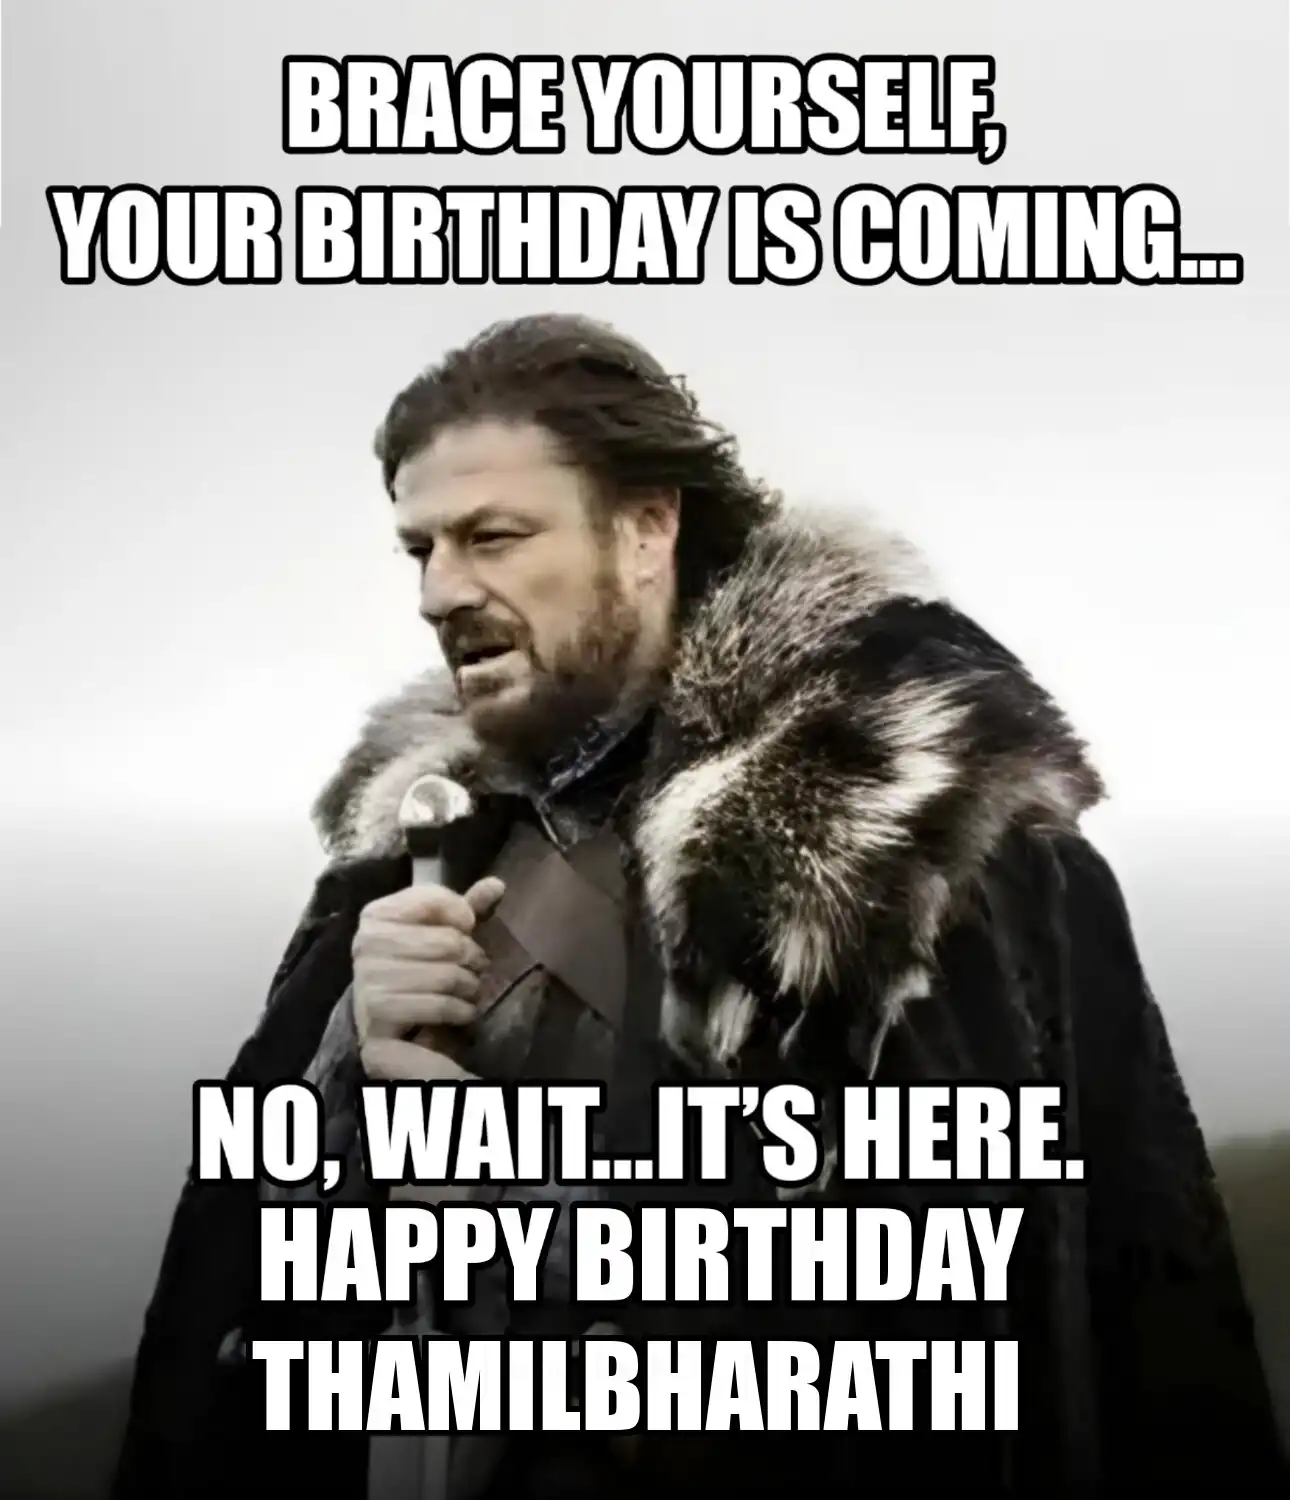 Happy Birthday Thamilbharathi Brace Yourself Your Birthday Is Coming Meme